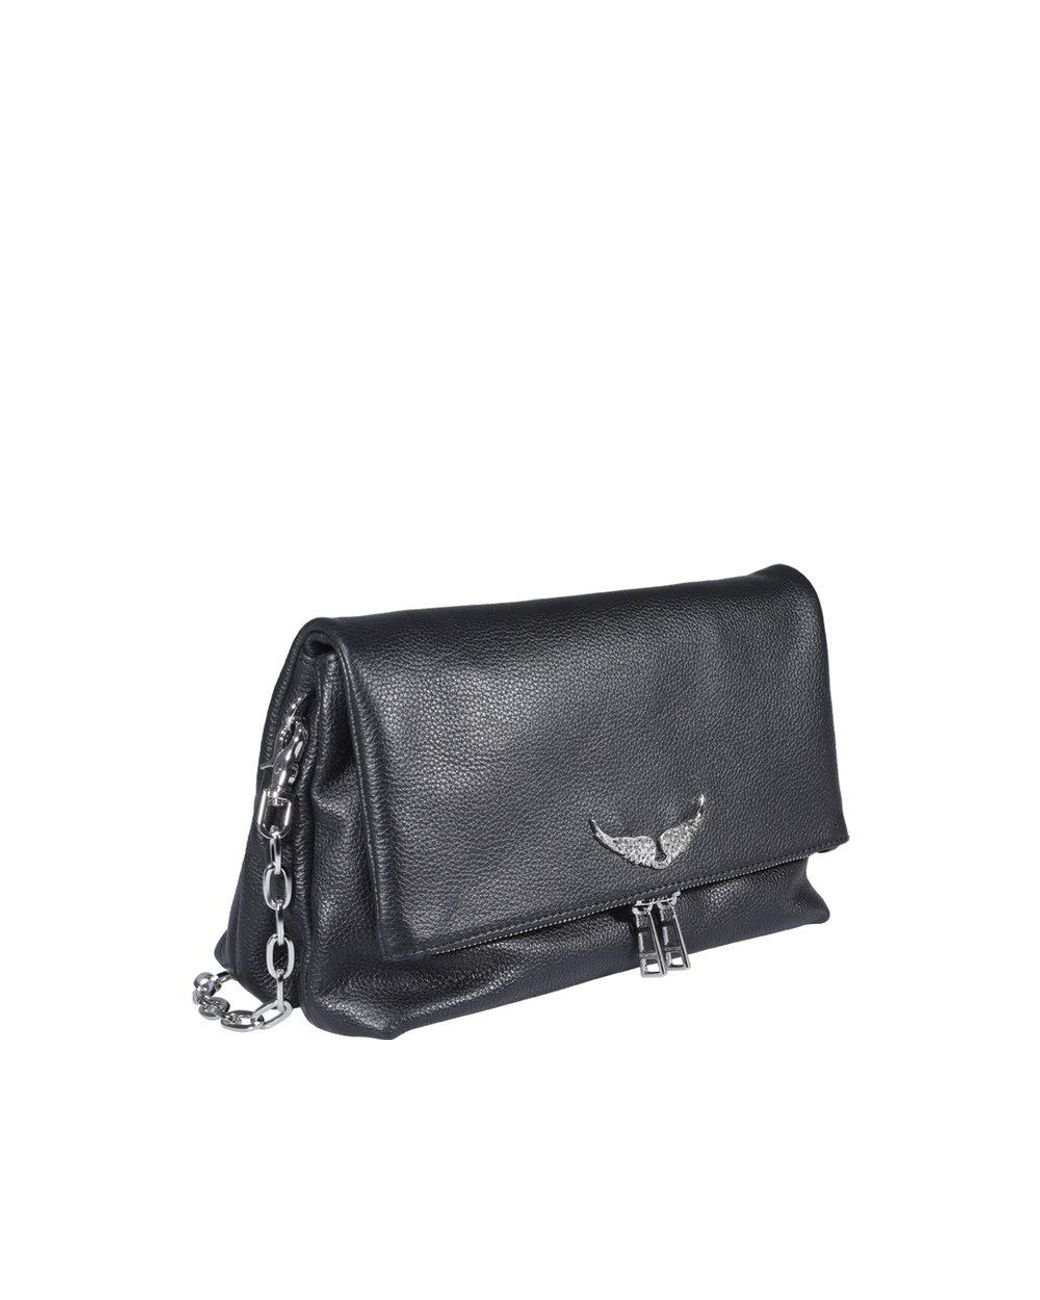 Zadig & Voltaire Zv Rocky Leather Swing Bag in Black